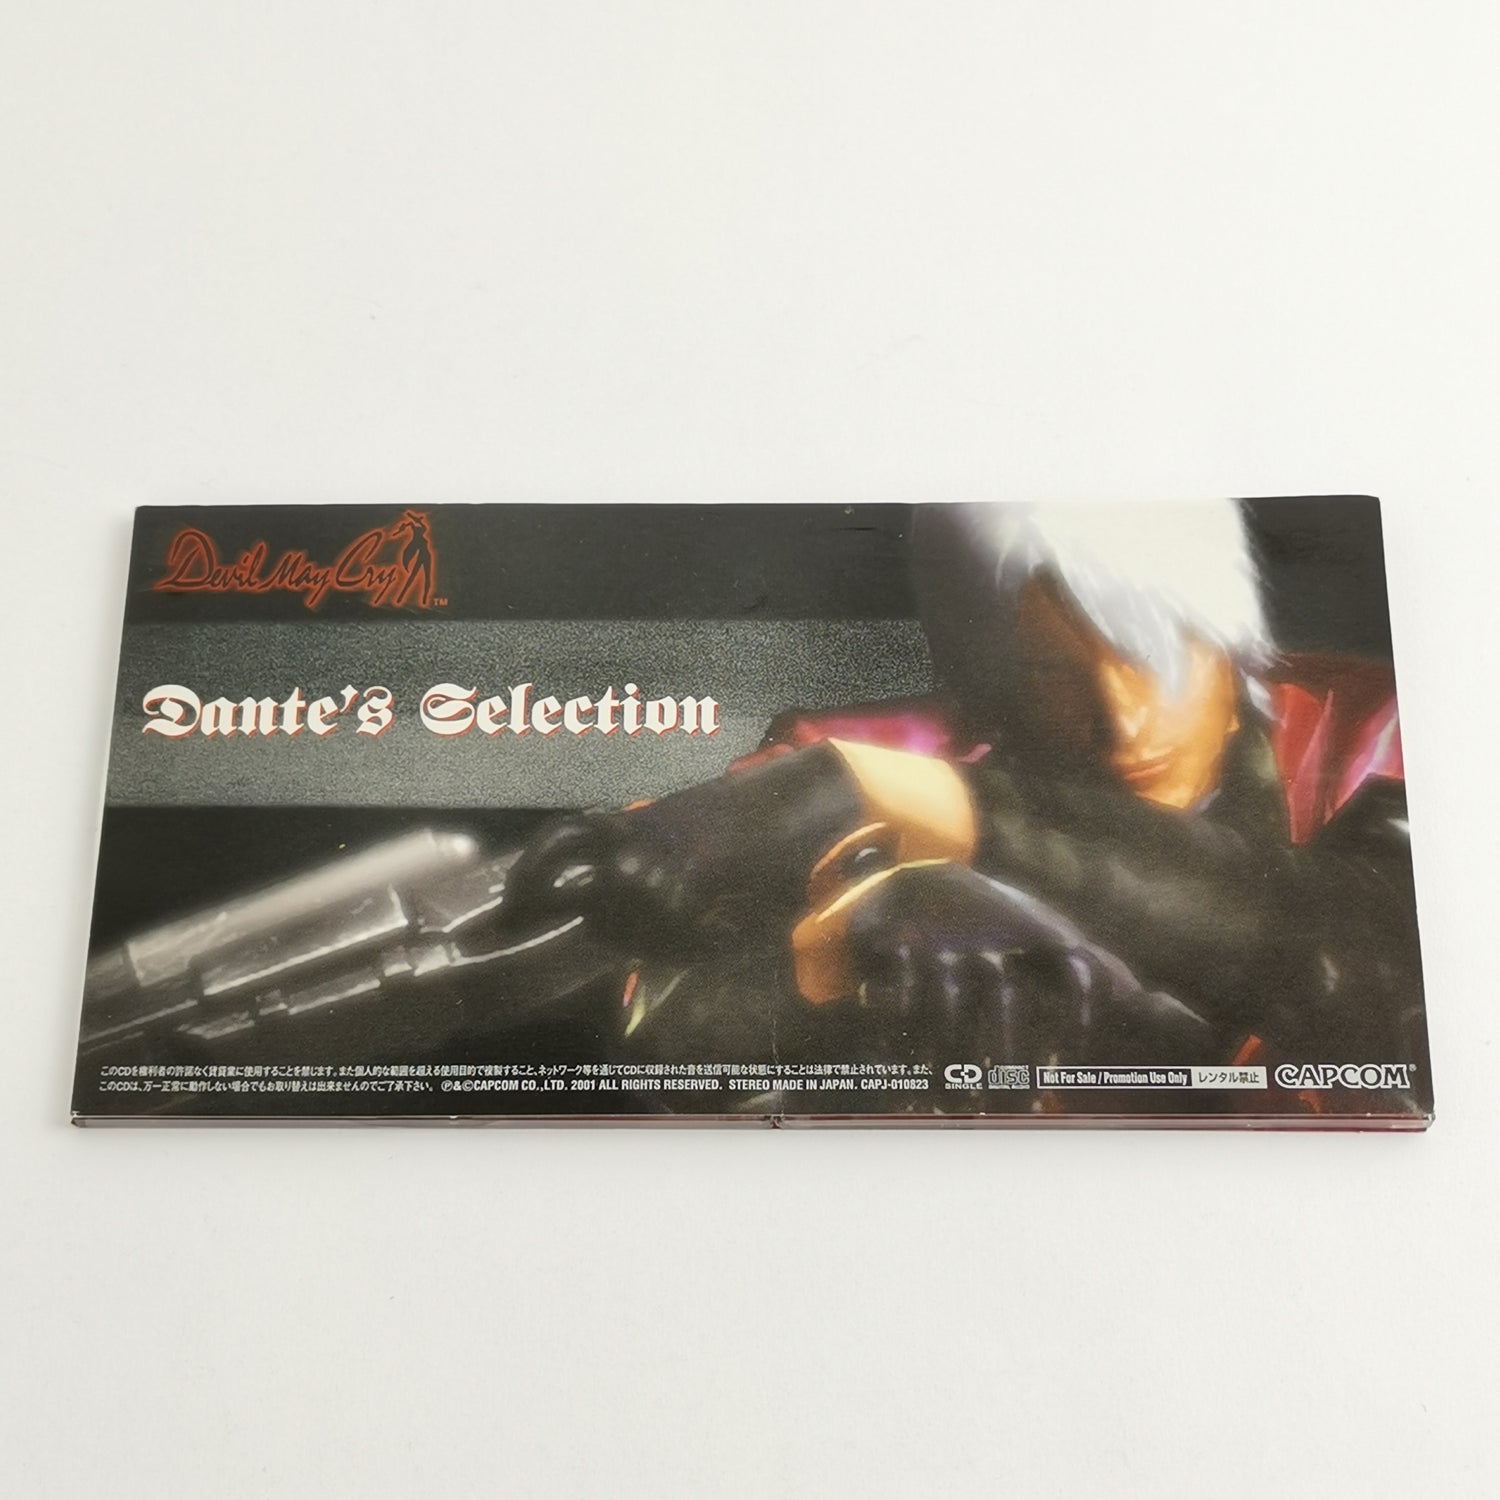 Original Japan Soundtrack CD: Devil May Cry Dante's Selection - Not for Sale